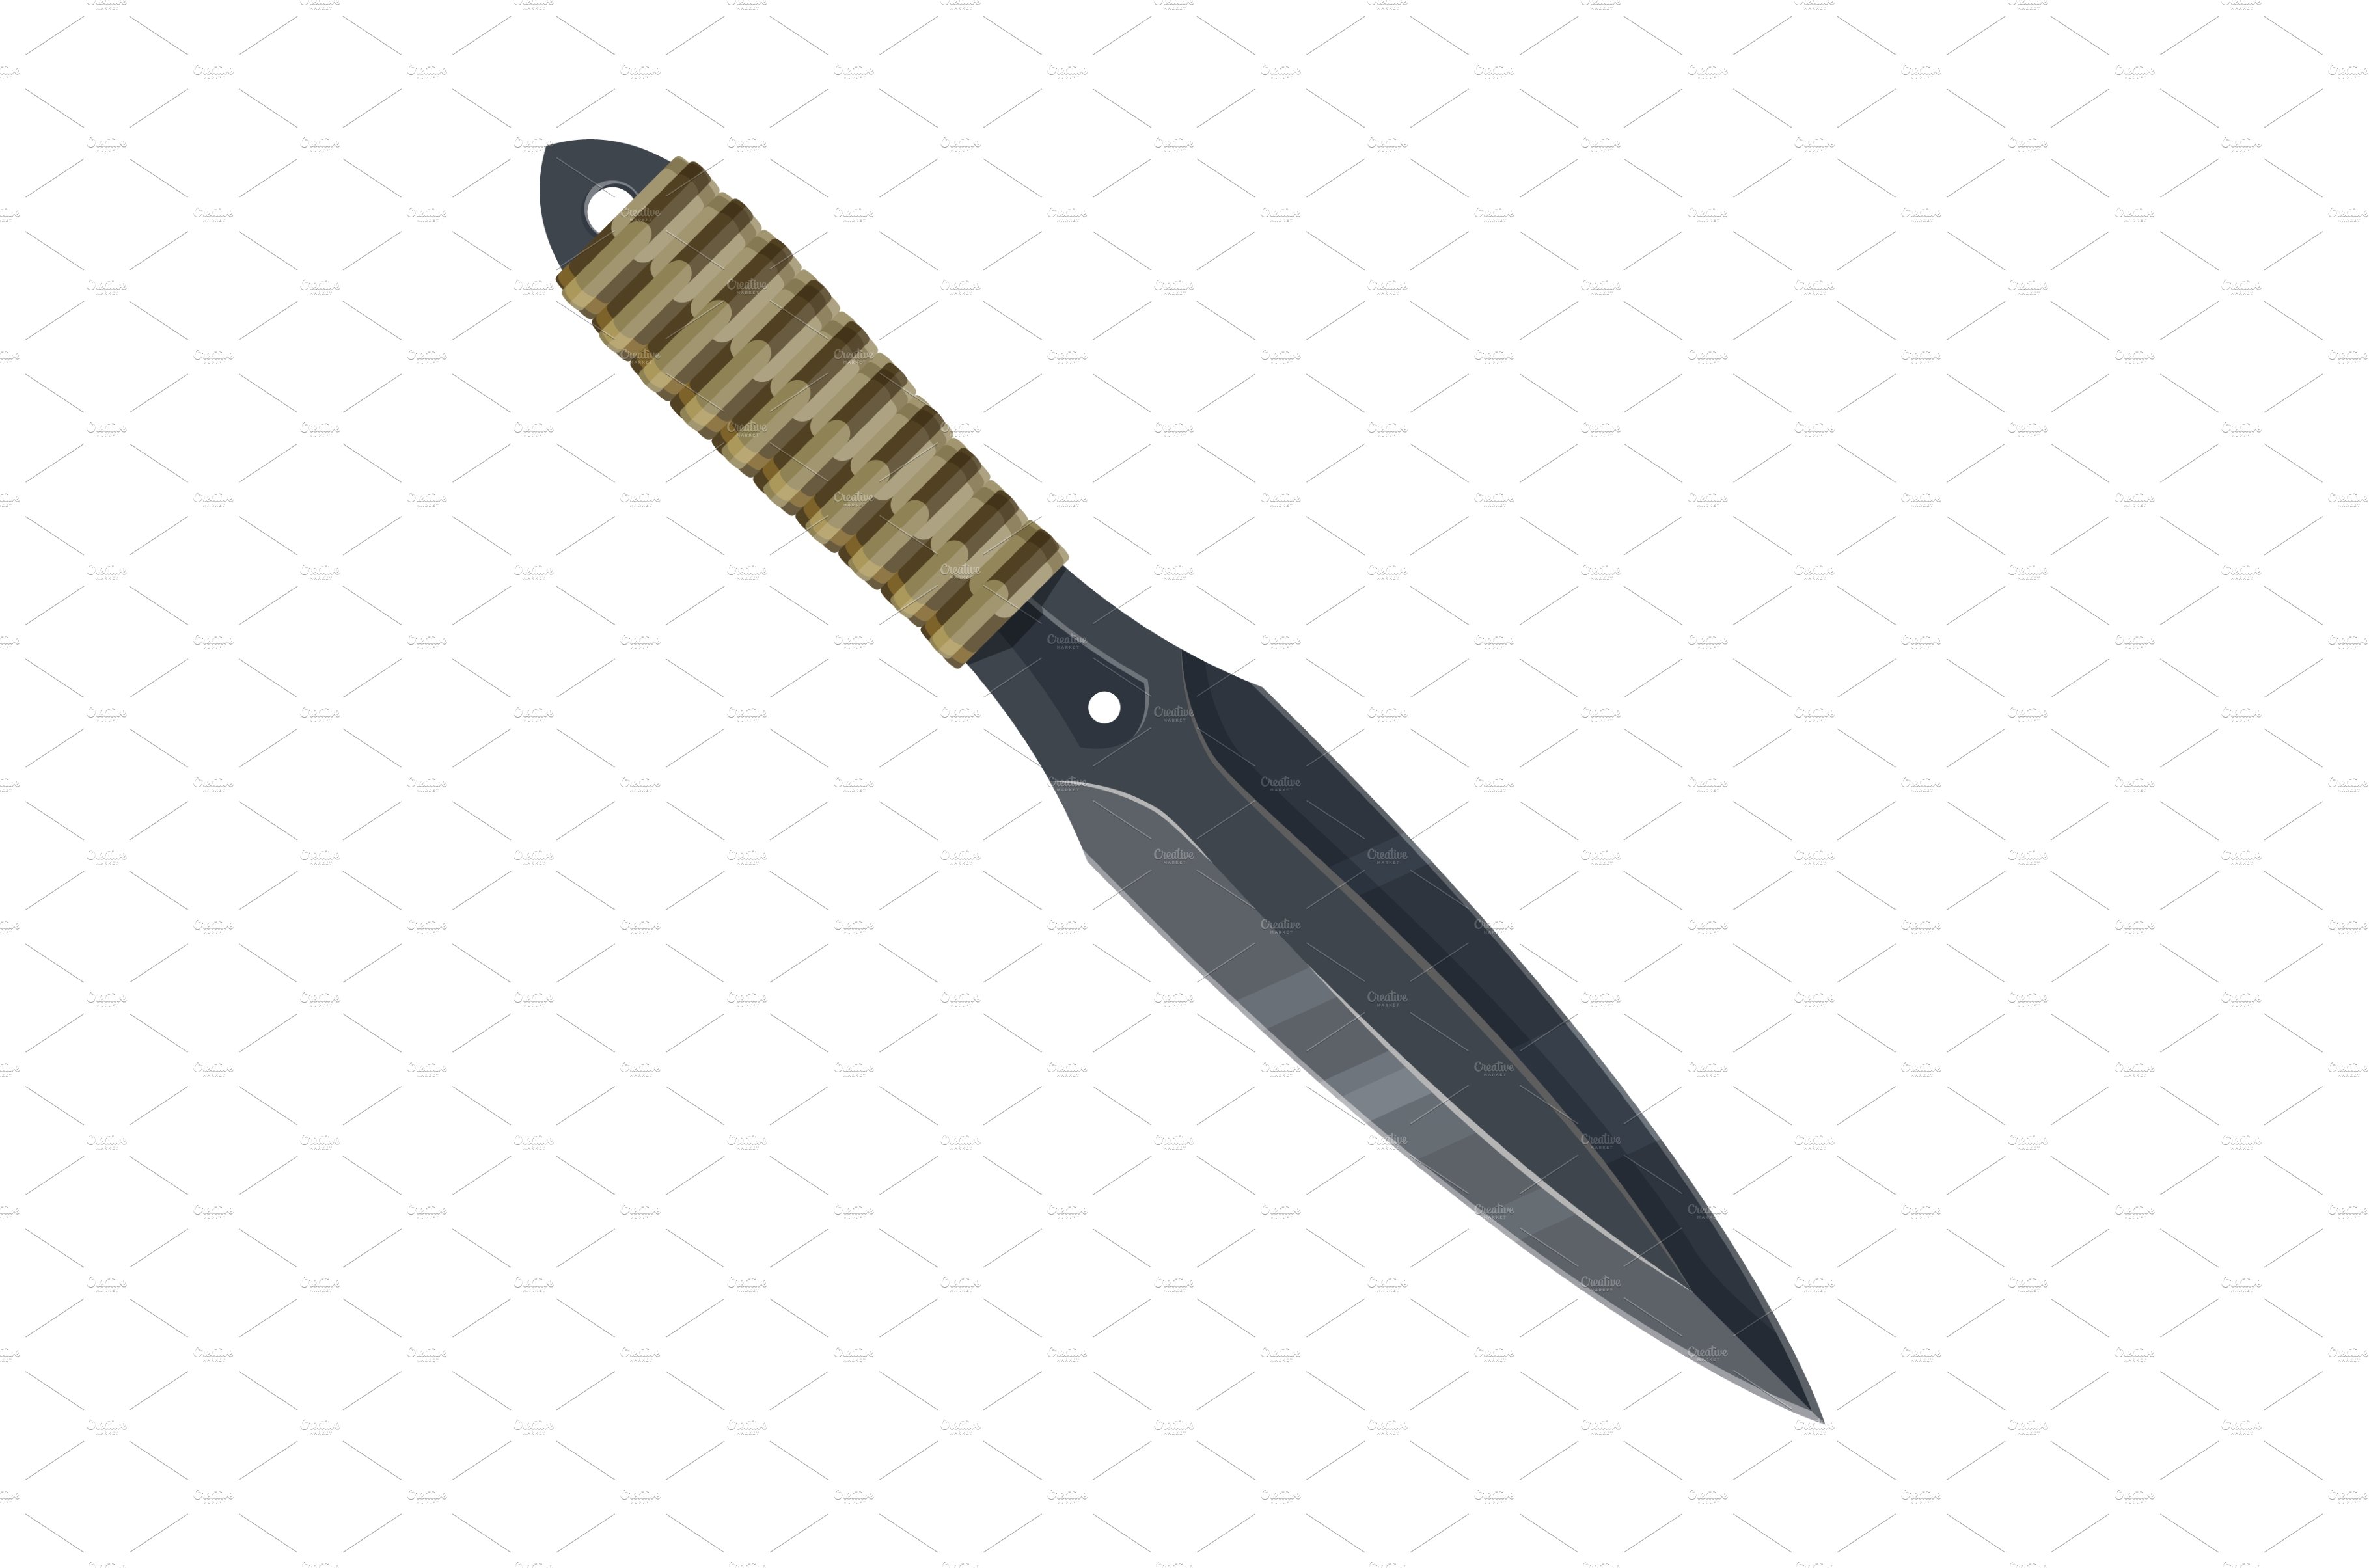 Dagger, tribal knife blade or cover image.